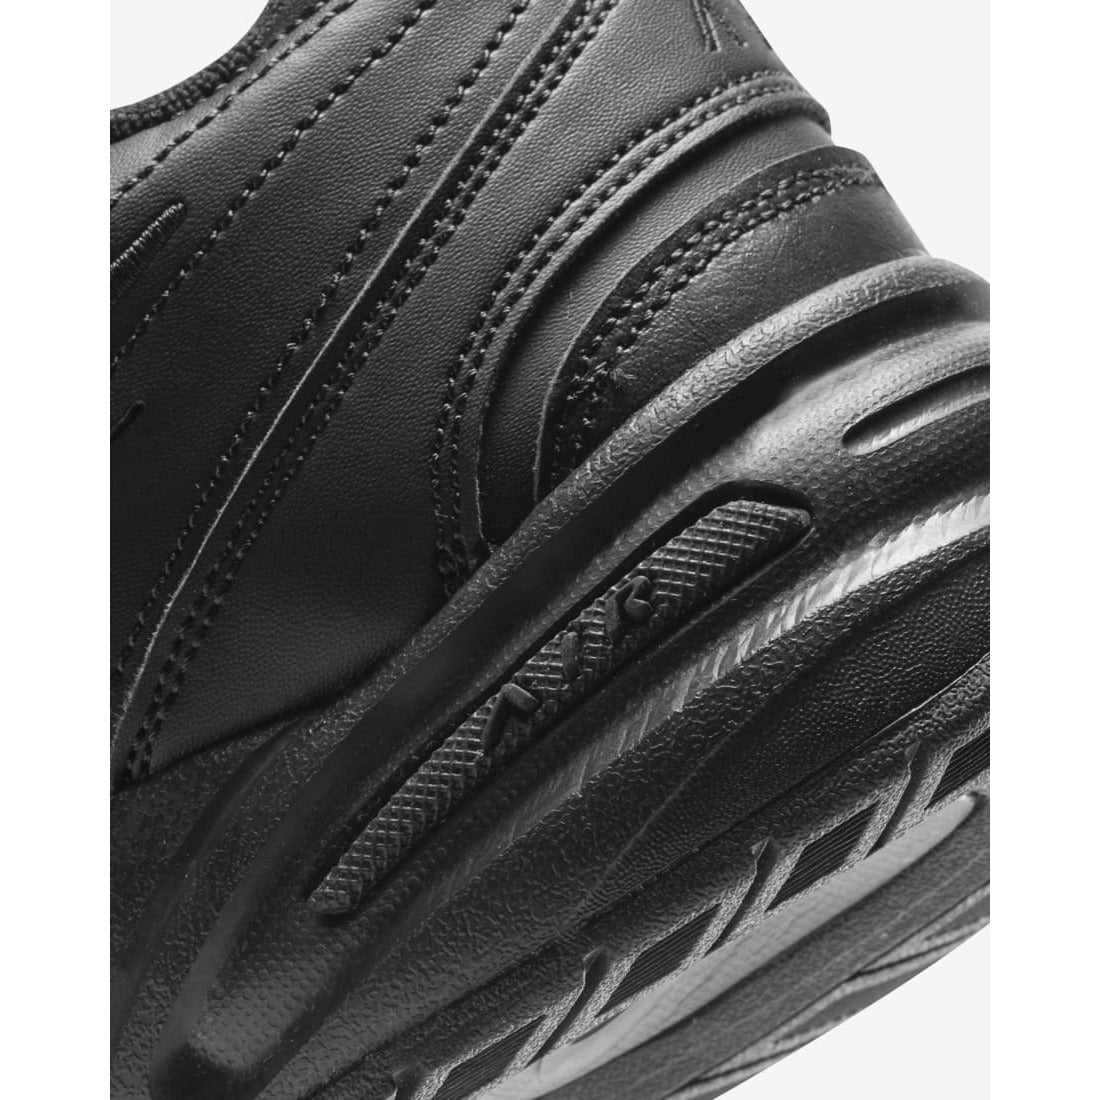 Nike Air Monarch IV Black 416355-001